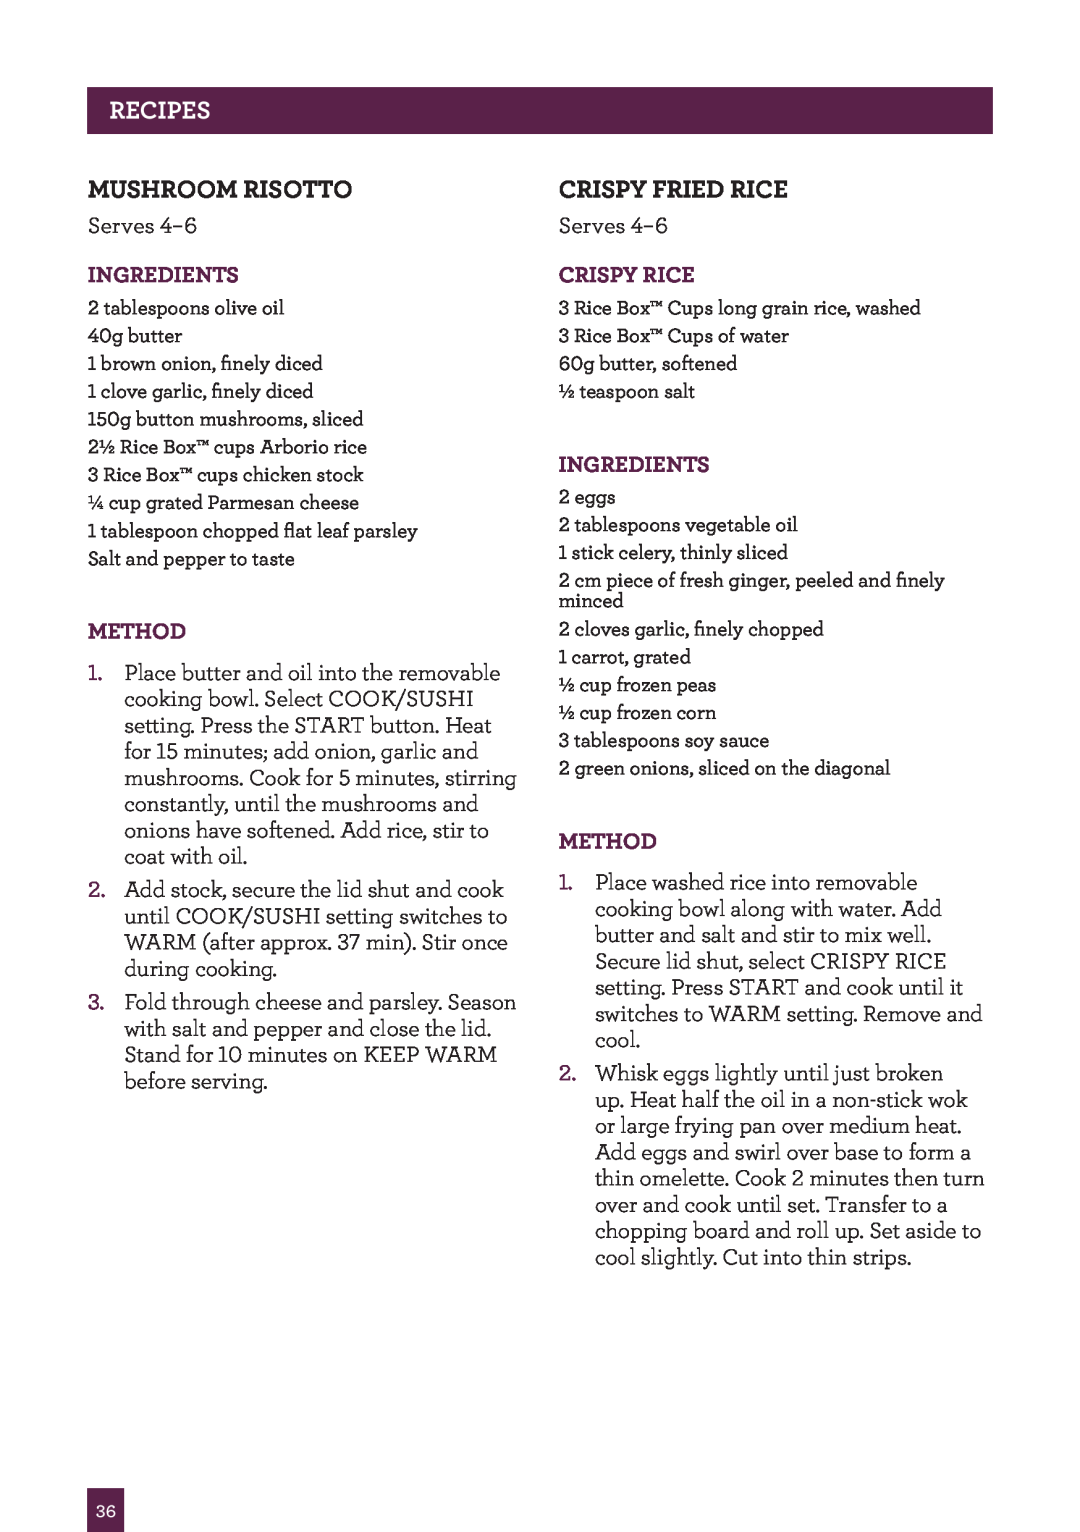 Breville BRC460 brochure Recipes, Mushroom Risotto, Crispy Fried Rice, Ingredients, Method, Crispy Rice 